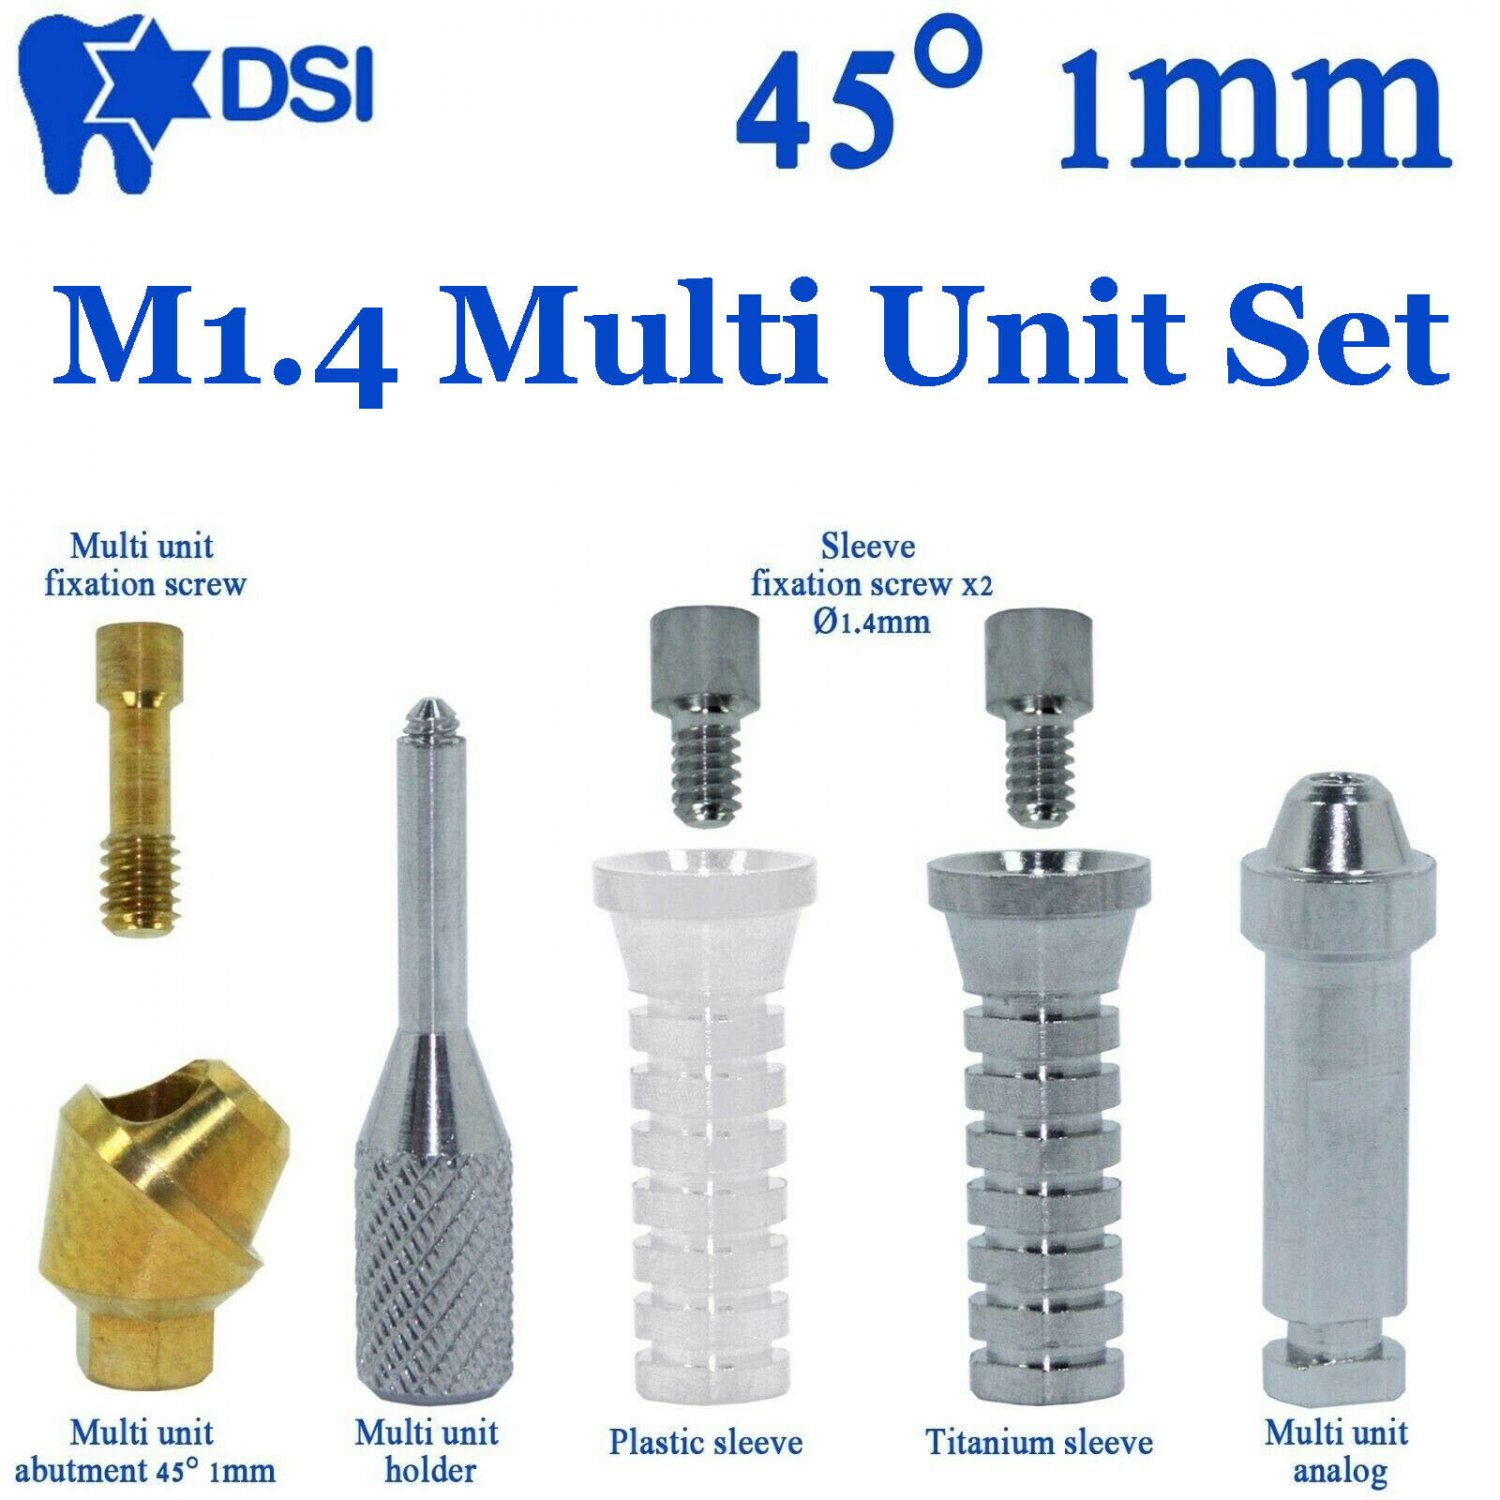 DSI Dental Implant Angulated Abutment M1.4 Multi Unit Full Set 8Pcs 45Â° 1mm